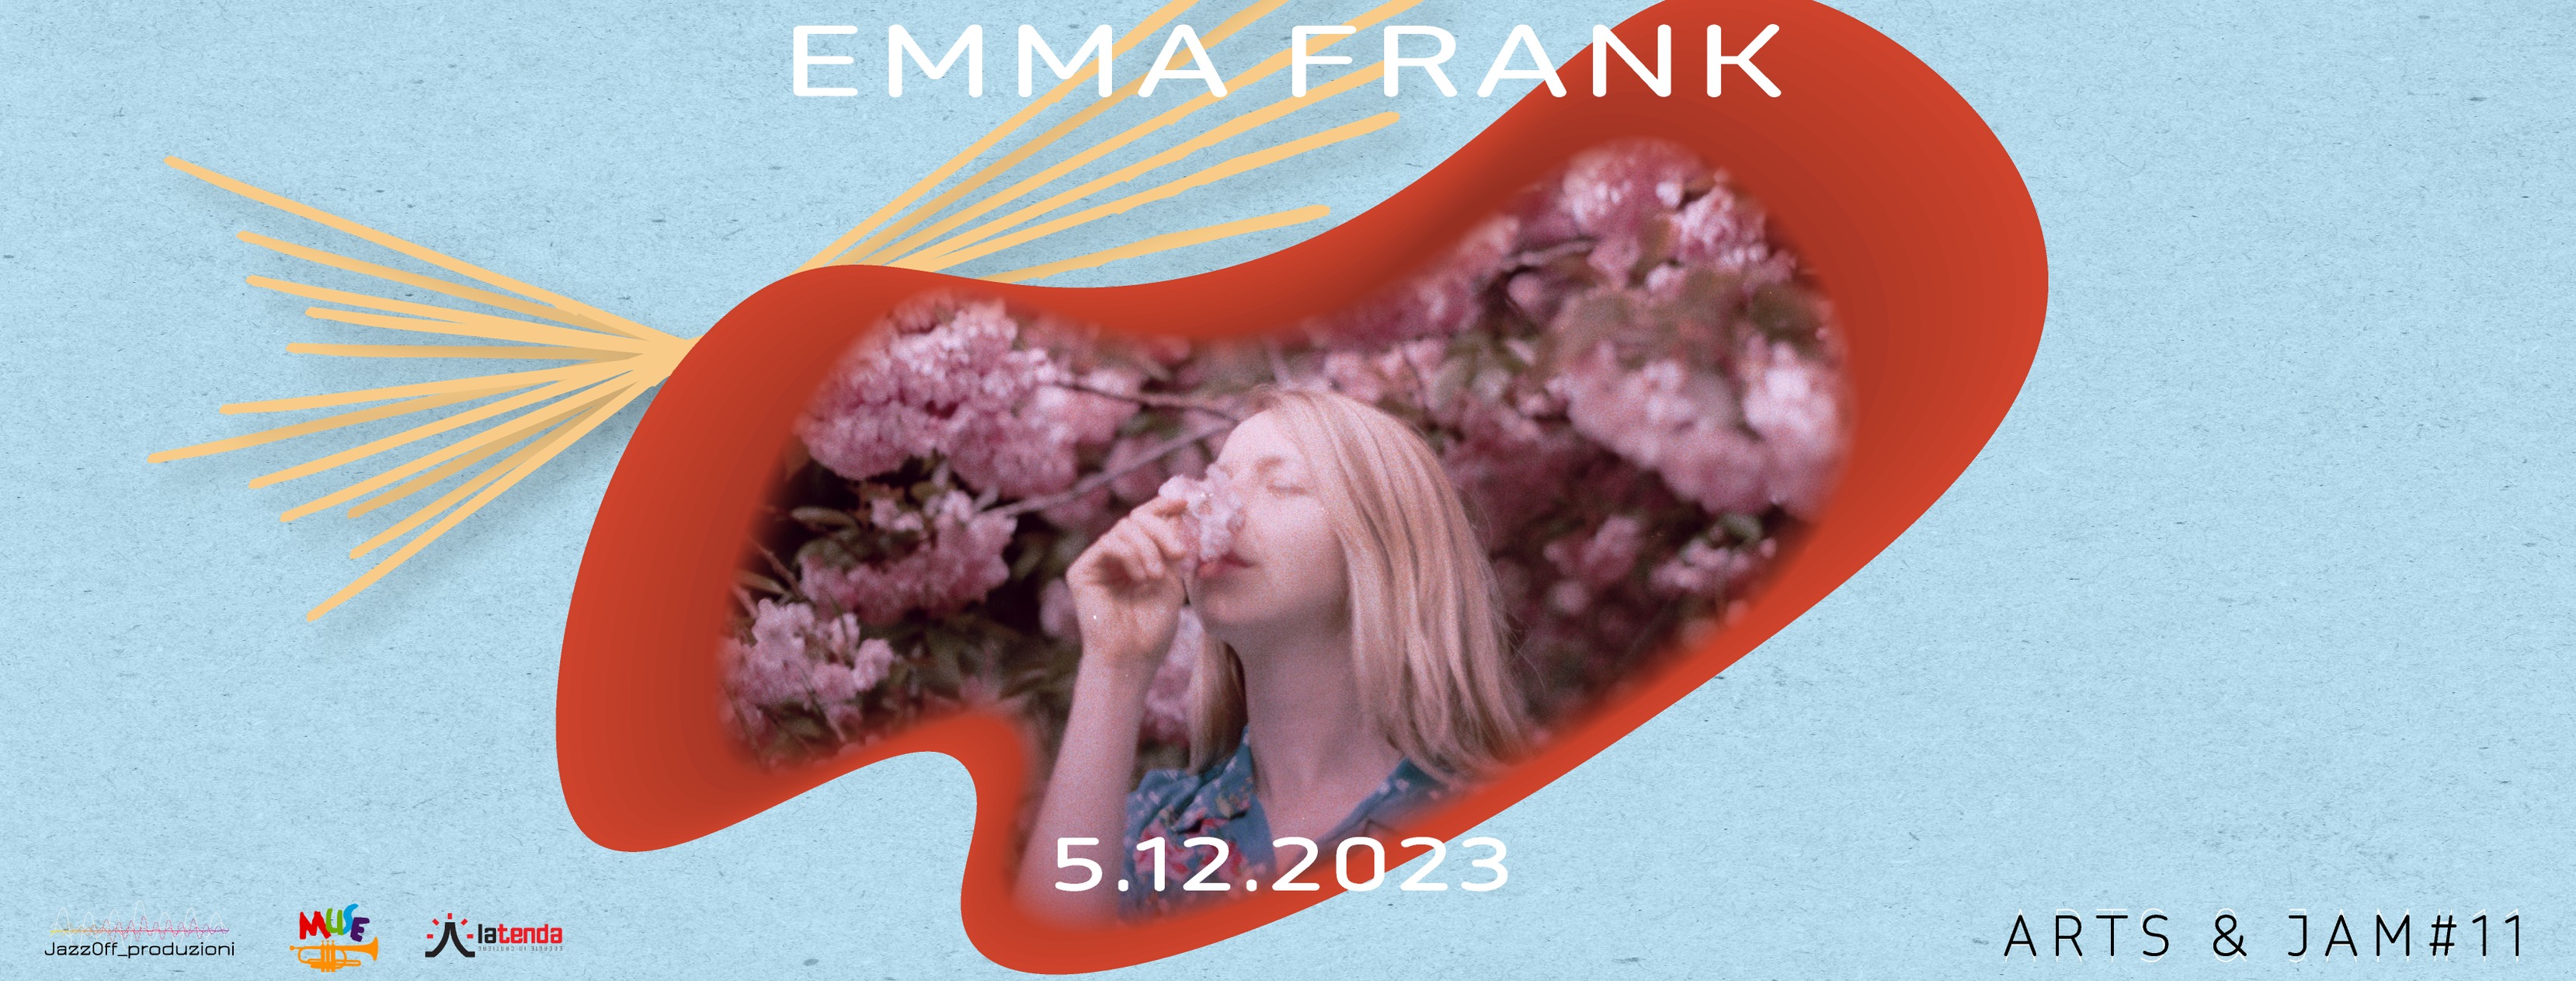 Emma Frank - ARTS & JAM #11